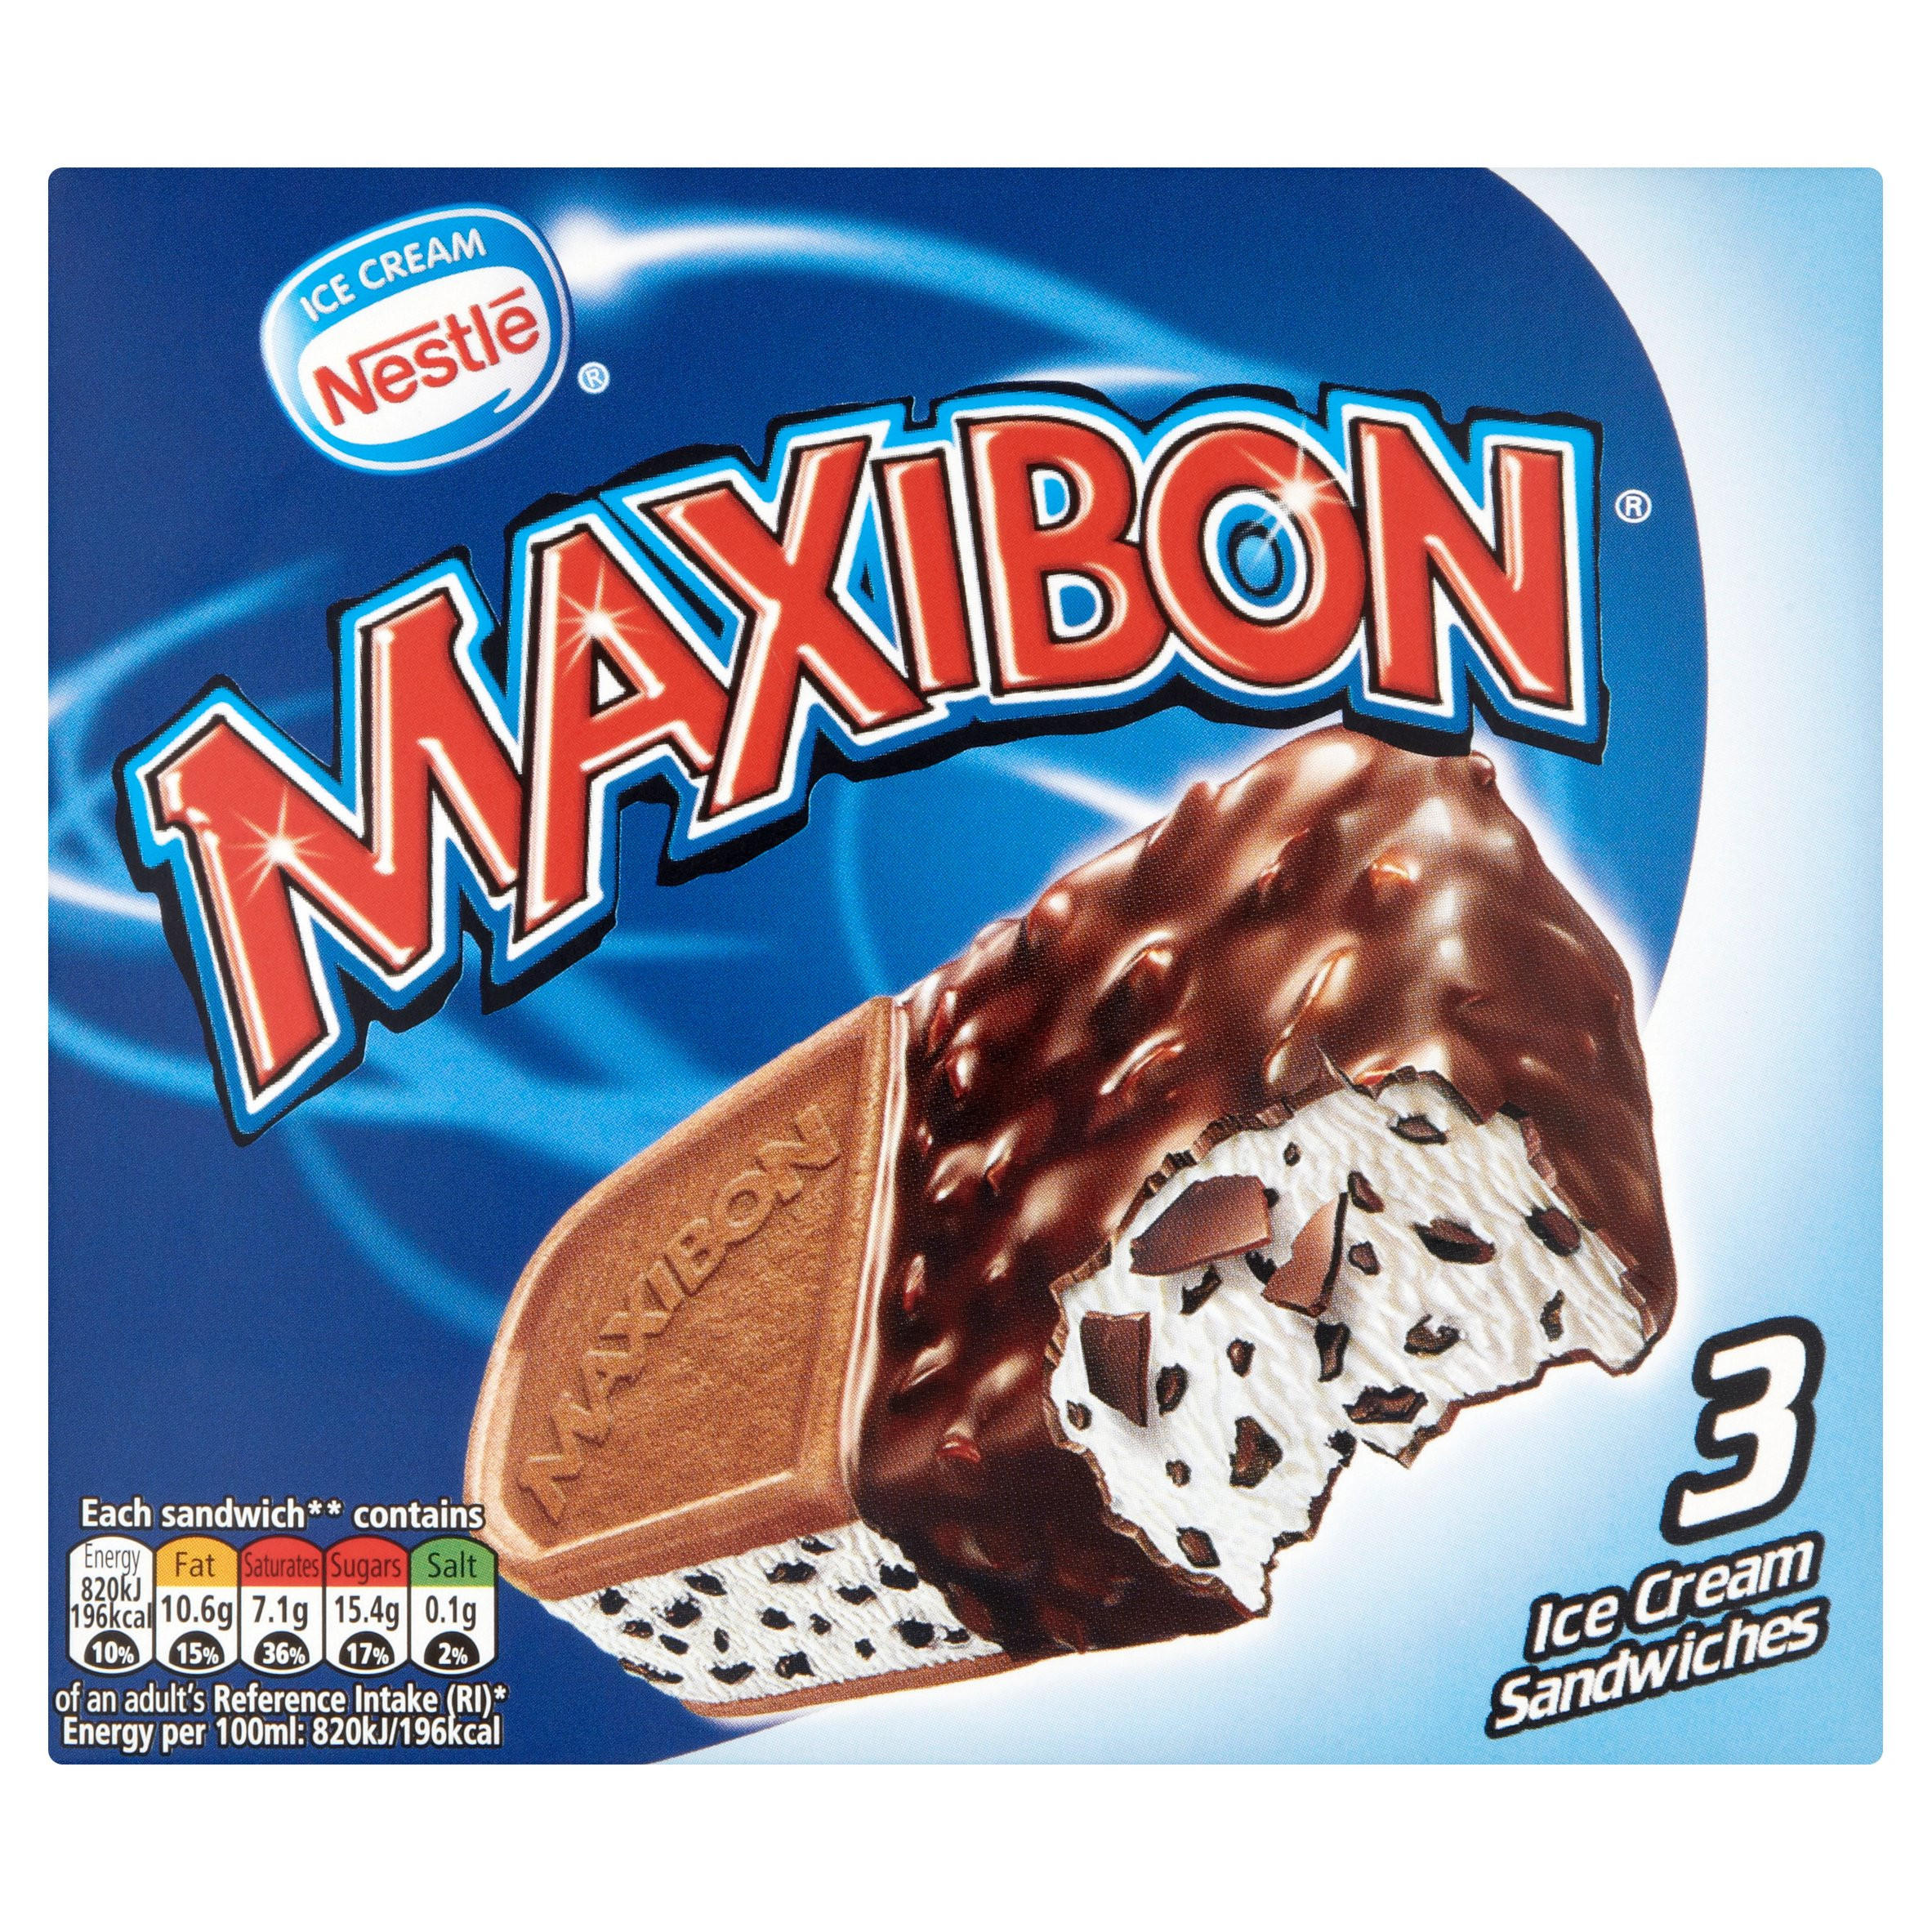 Мороженое сэндвич Максибон